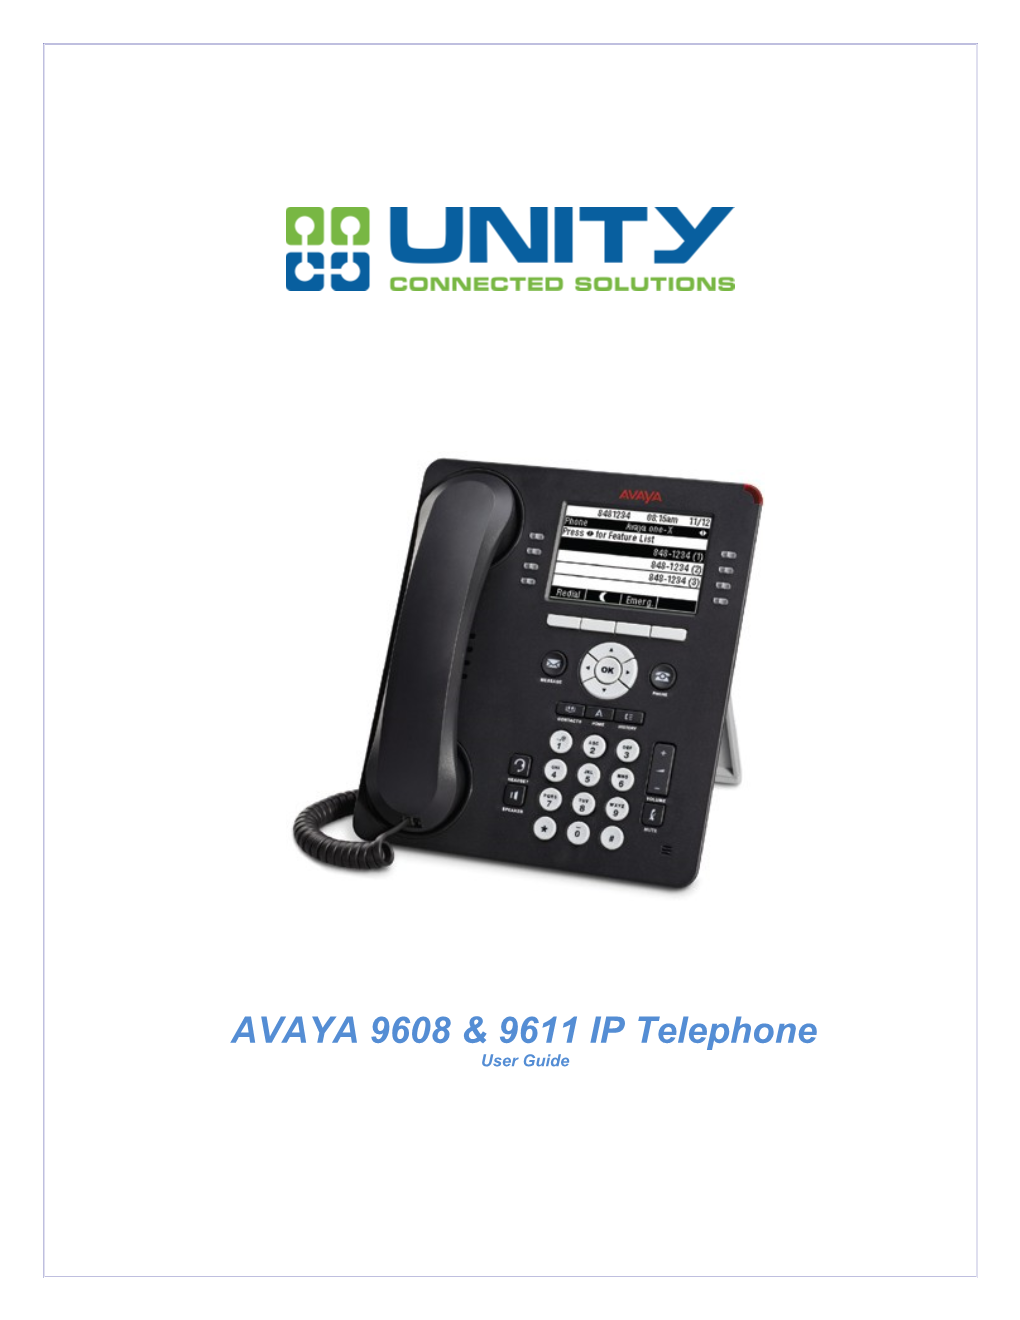 AVAYA 9608 & 9611 IP Telephone